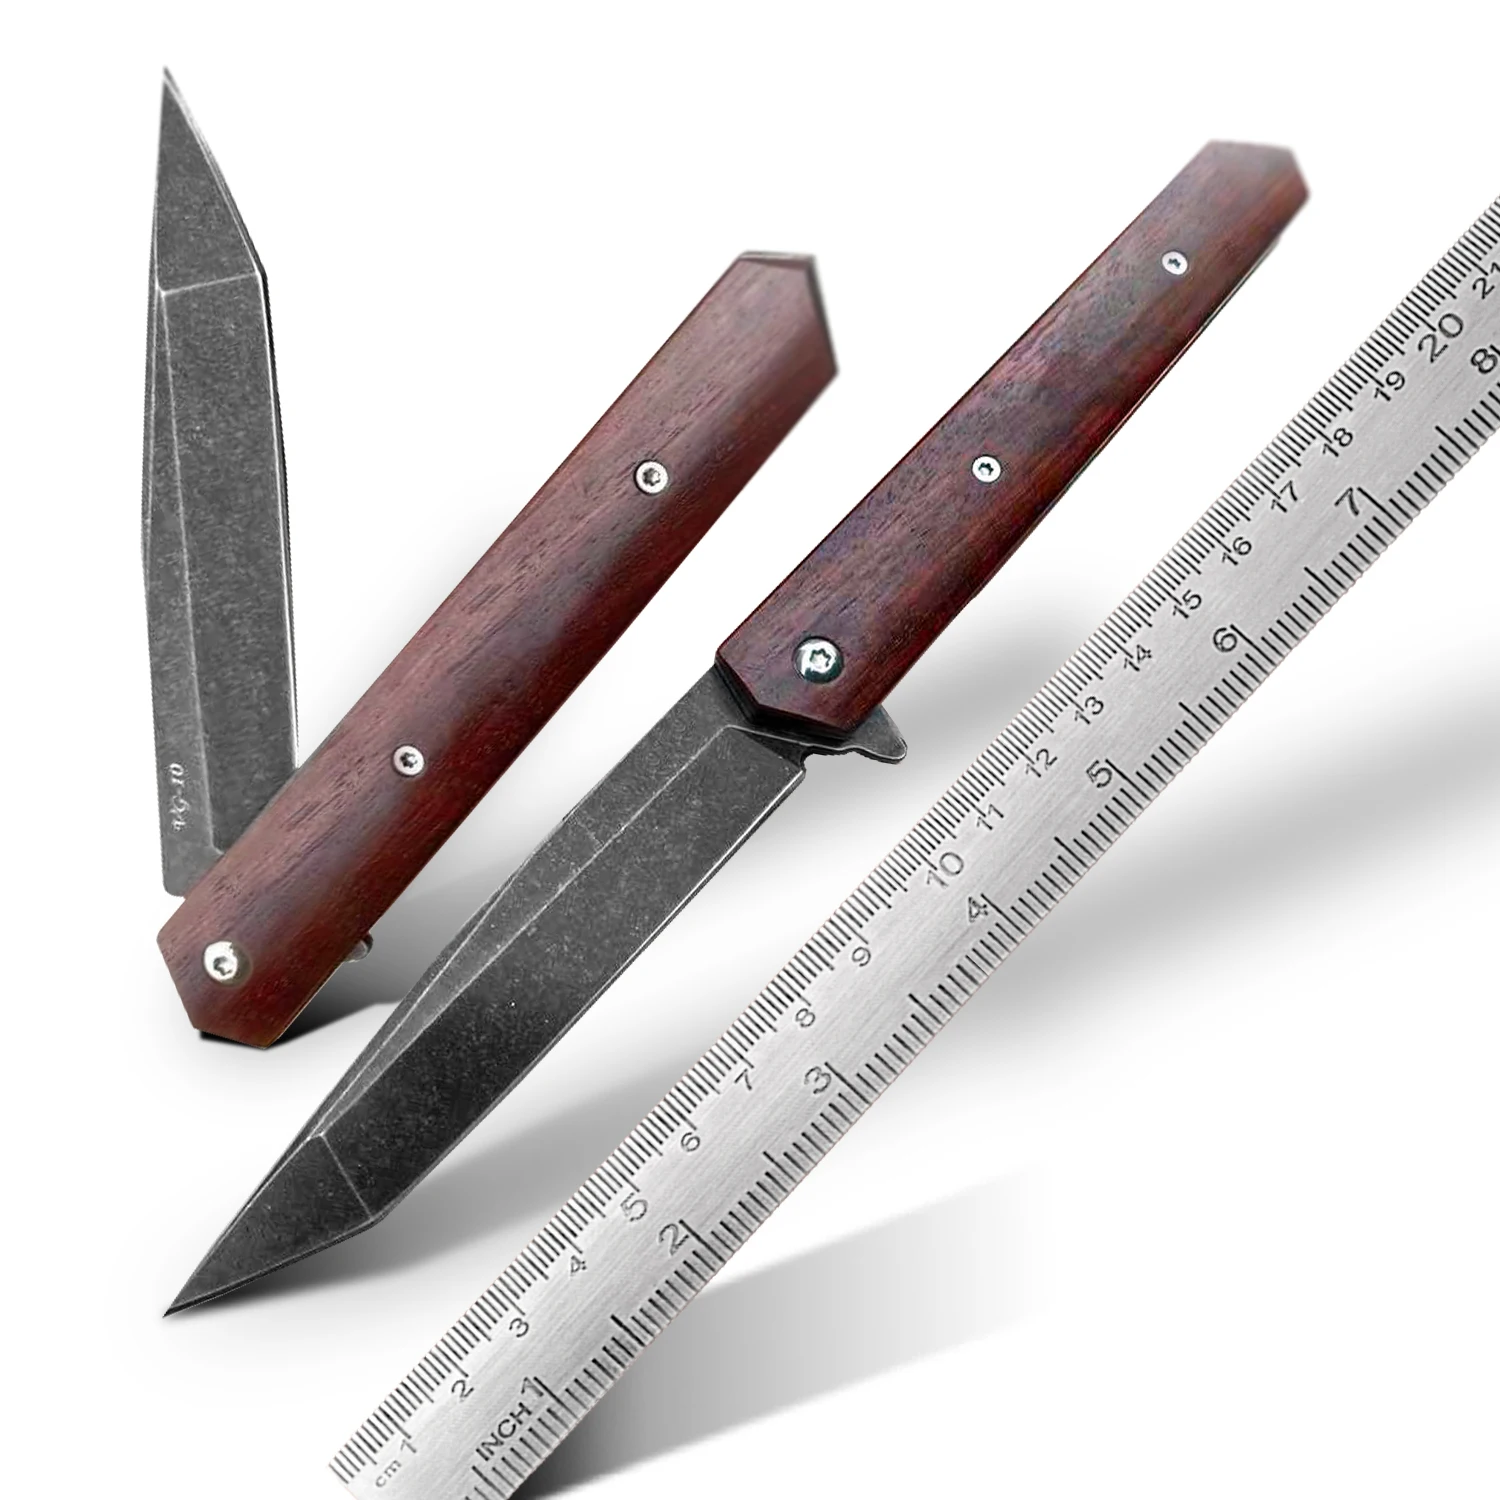 NEWOOTZ VG10 steel rosewood handle hiking fishing self-defense outdoor activities folding knife